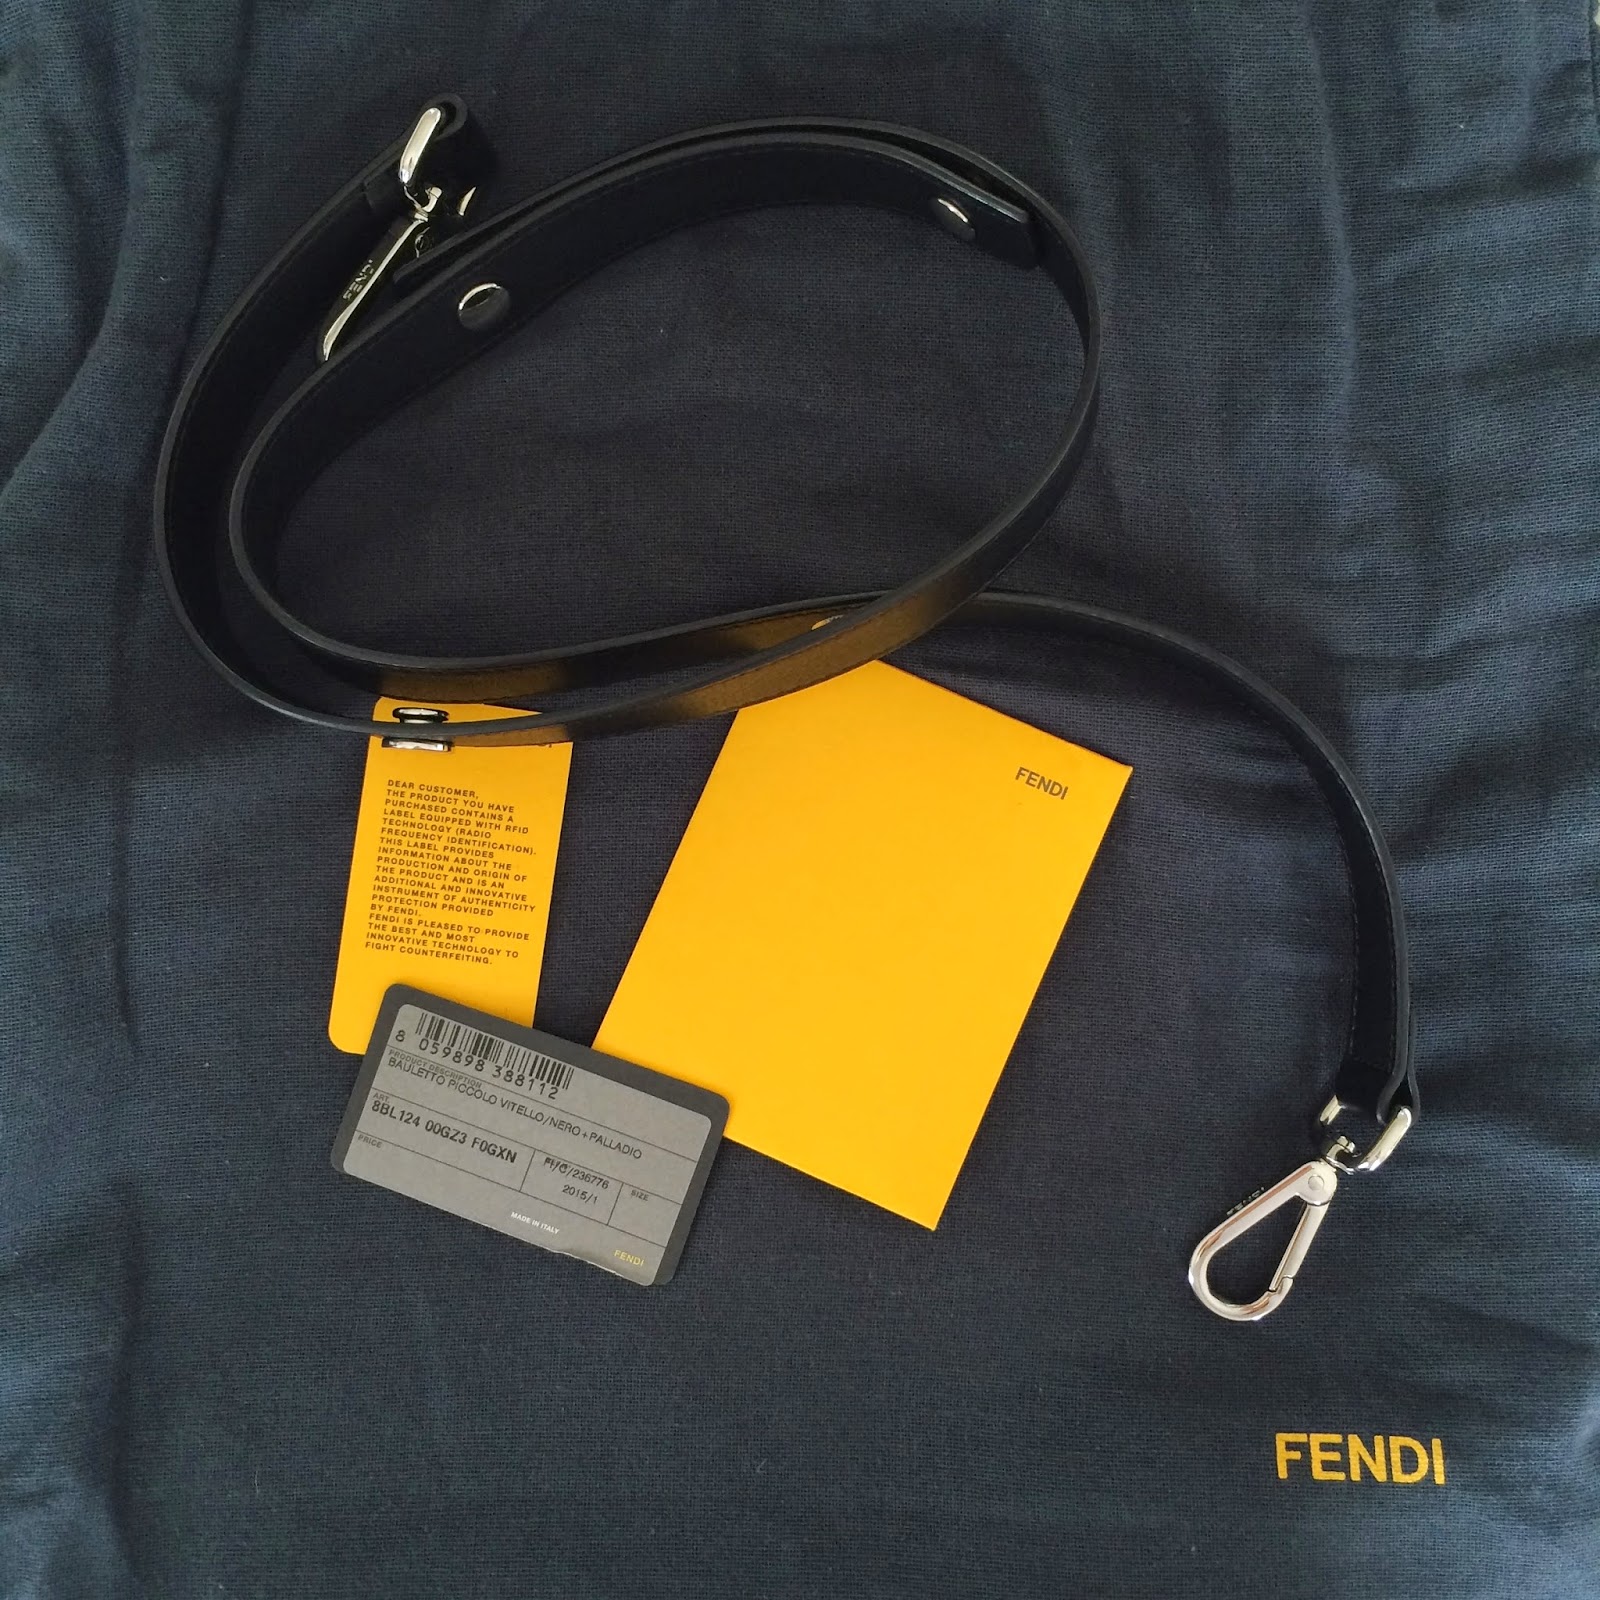 simplepretty tag sale: Black Fendi By The Way Bag: $600 - SOLD